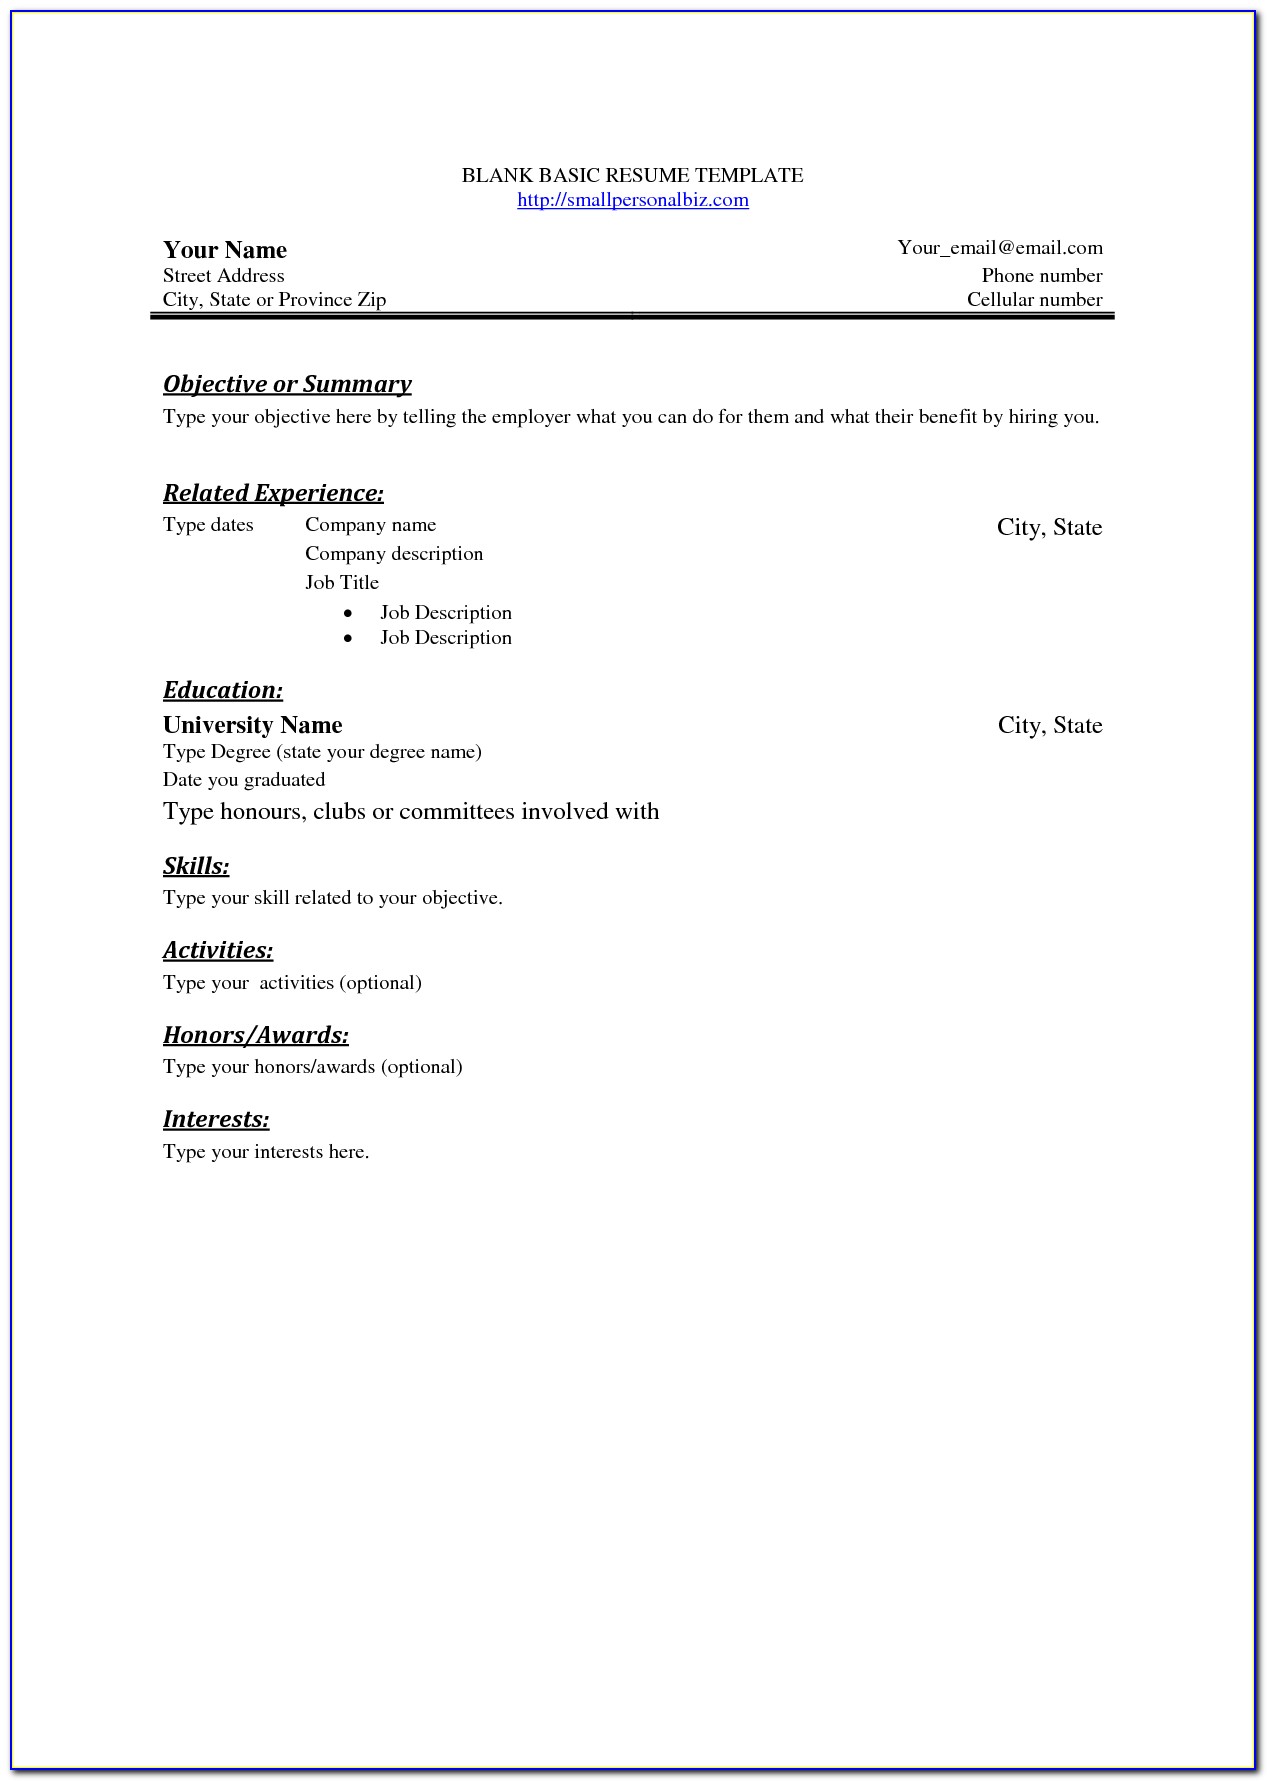 Blank Basic Resume Templates